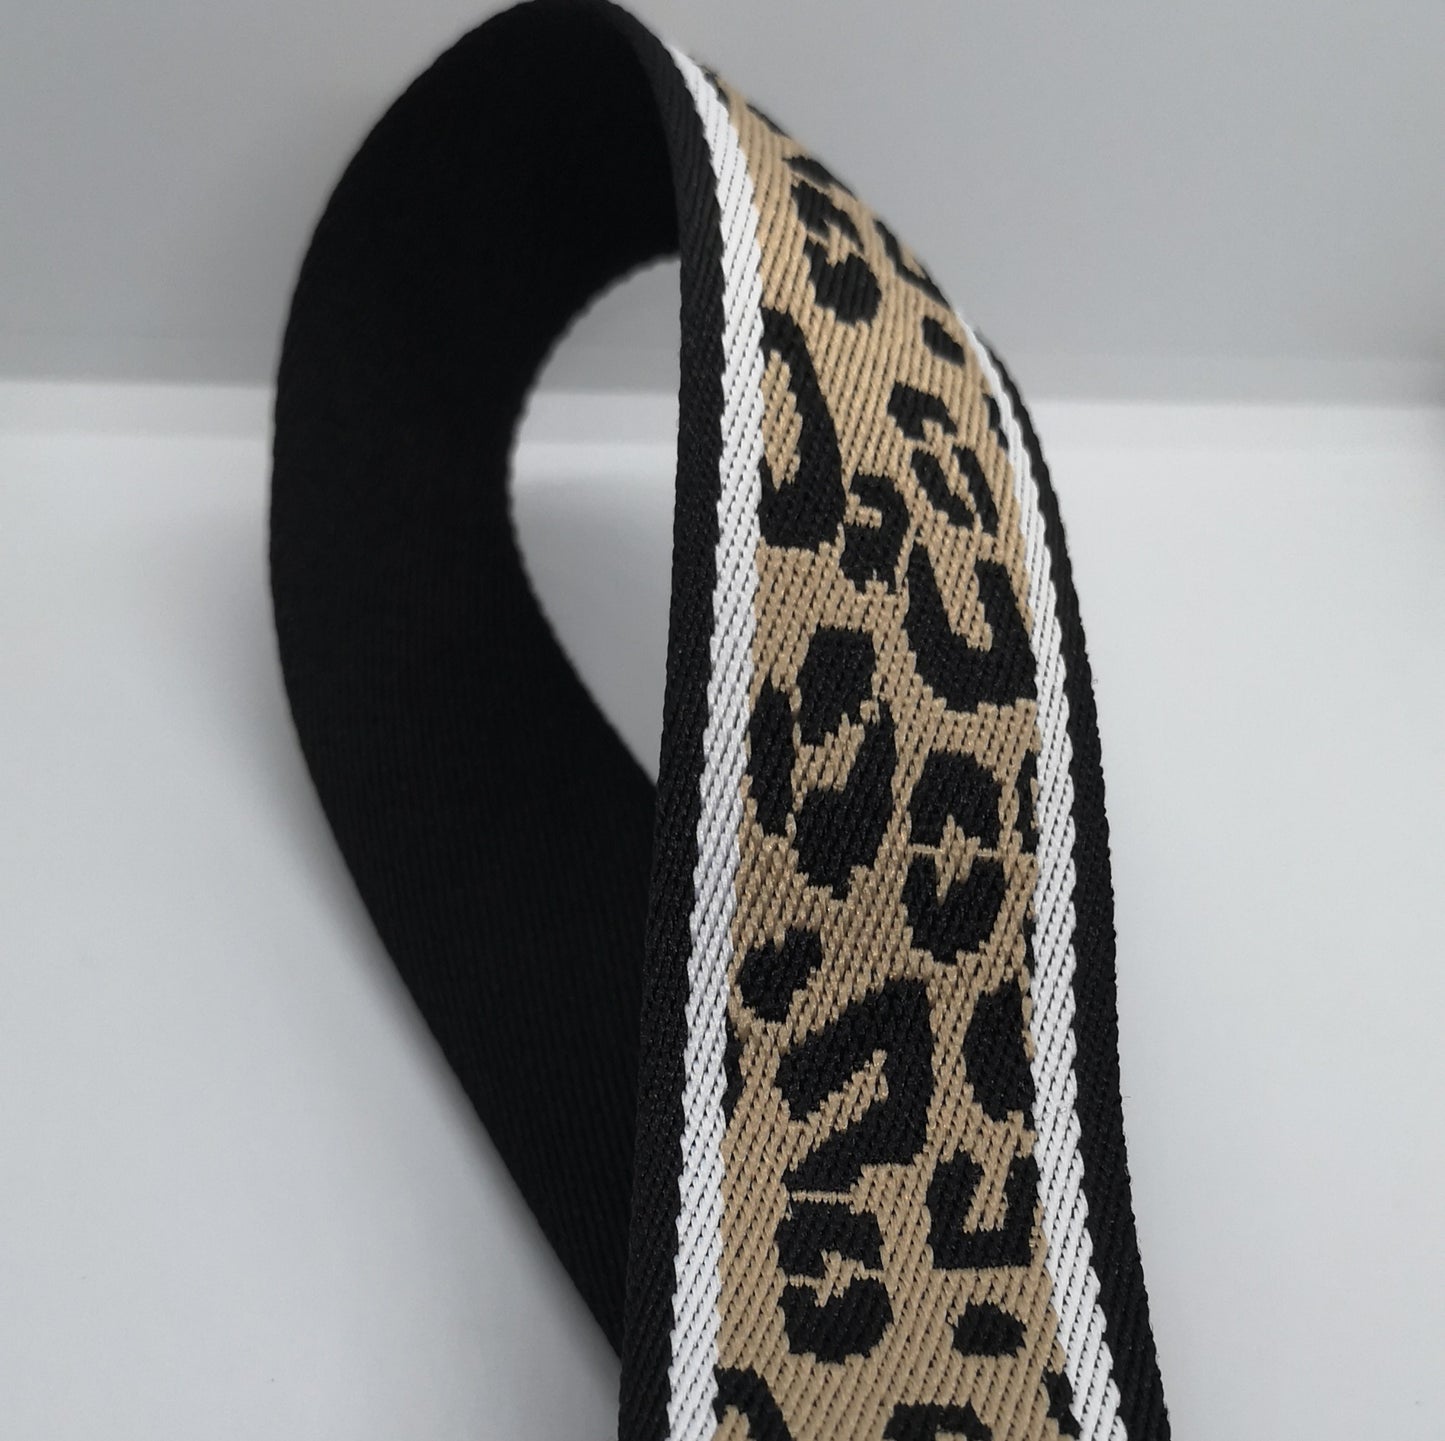 1.5" Webbing - Black and Tan leopard